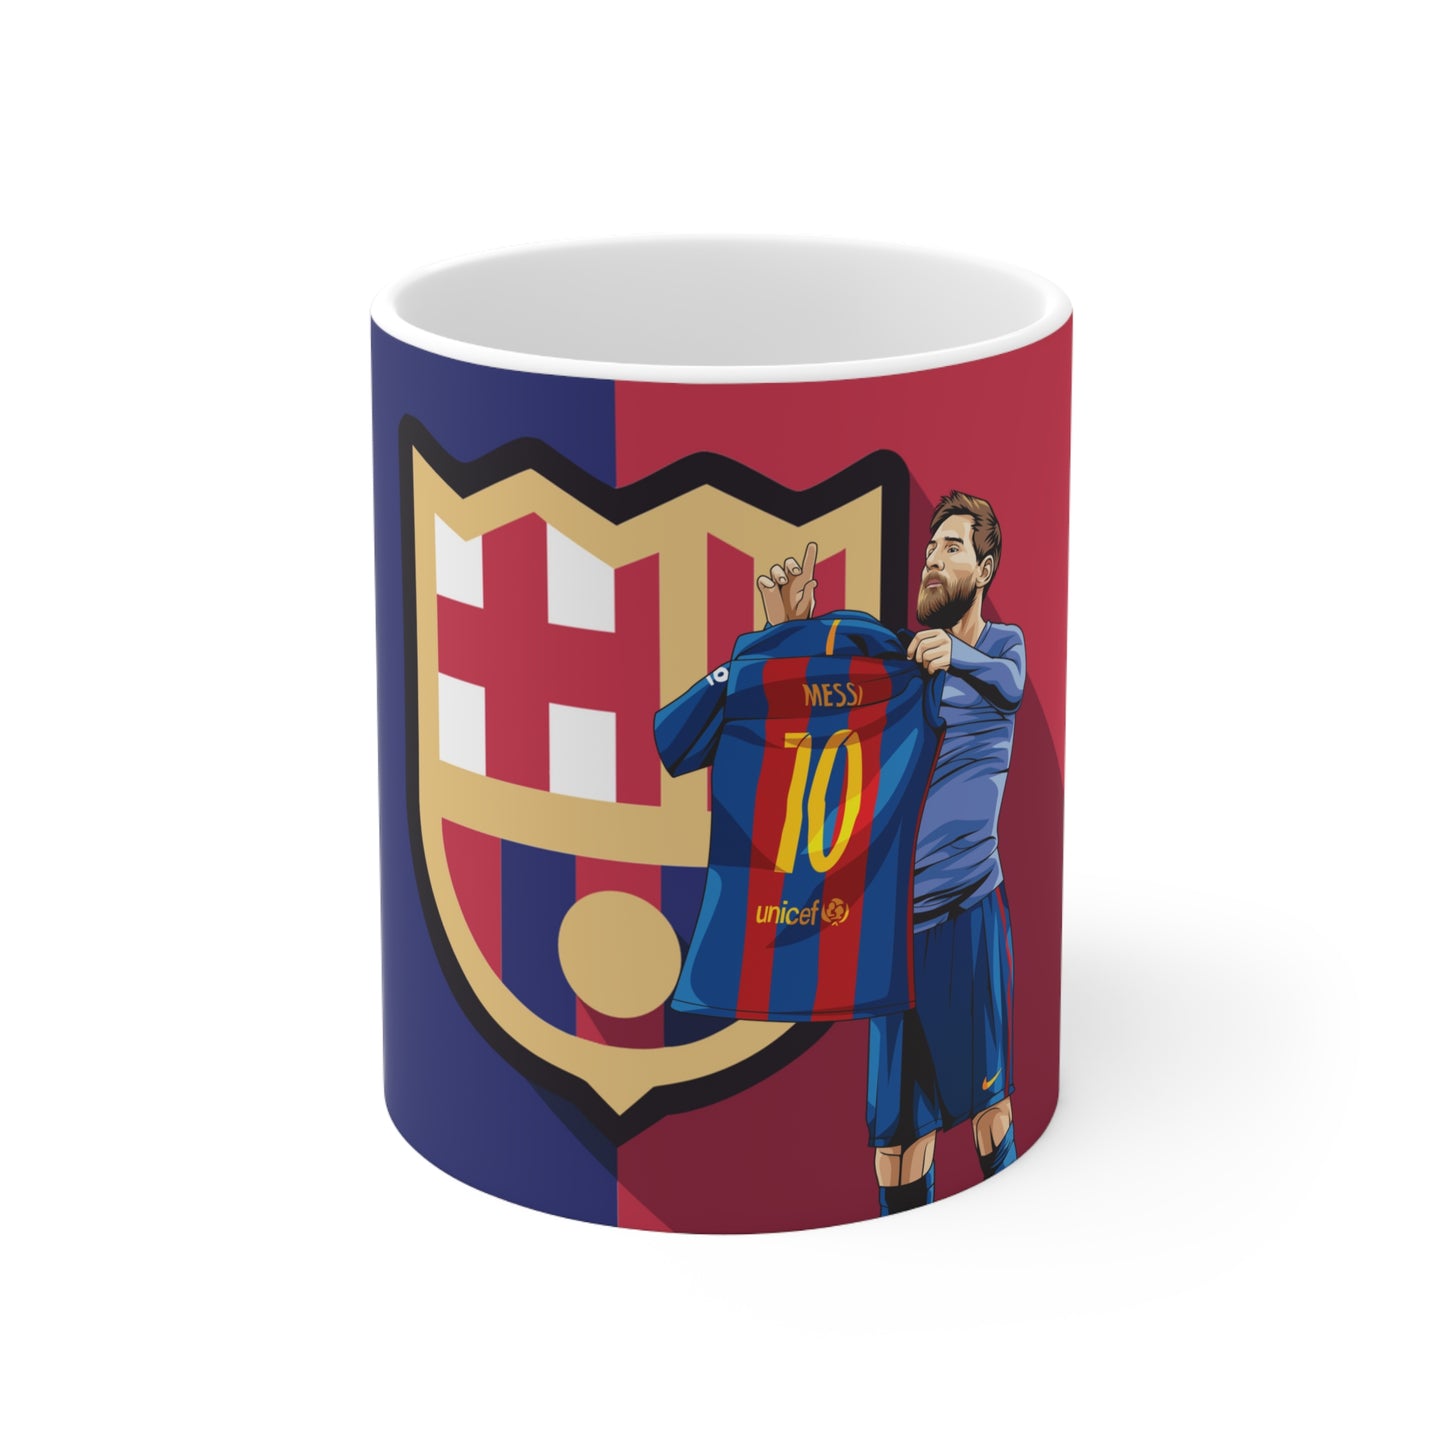 El Clasico Iconic Messi Celebration Ceramic Coffee Mug 11oz